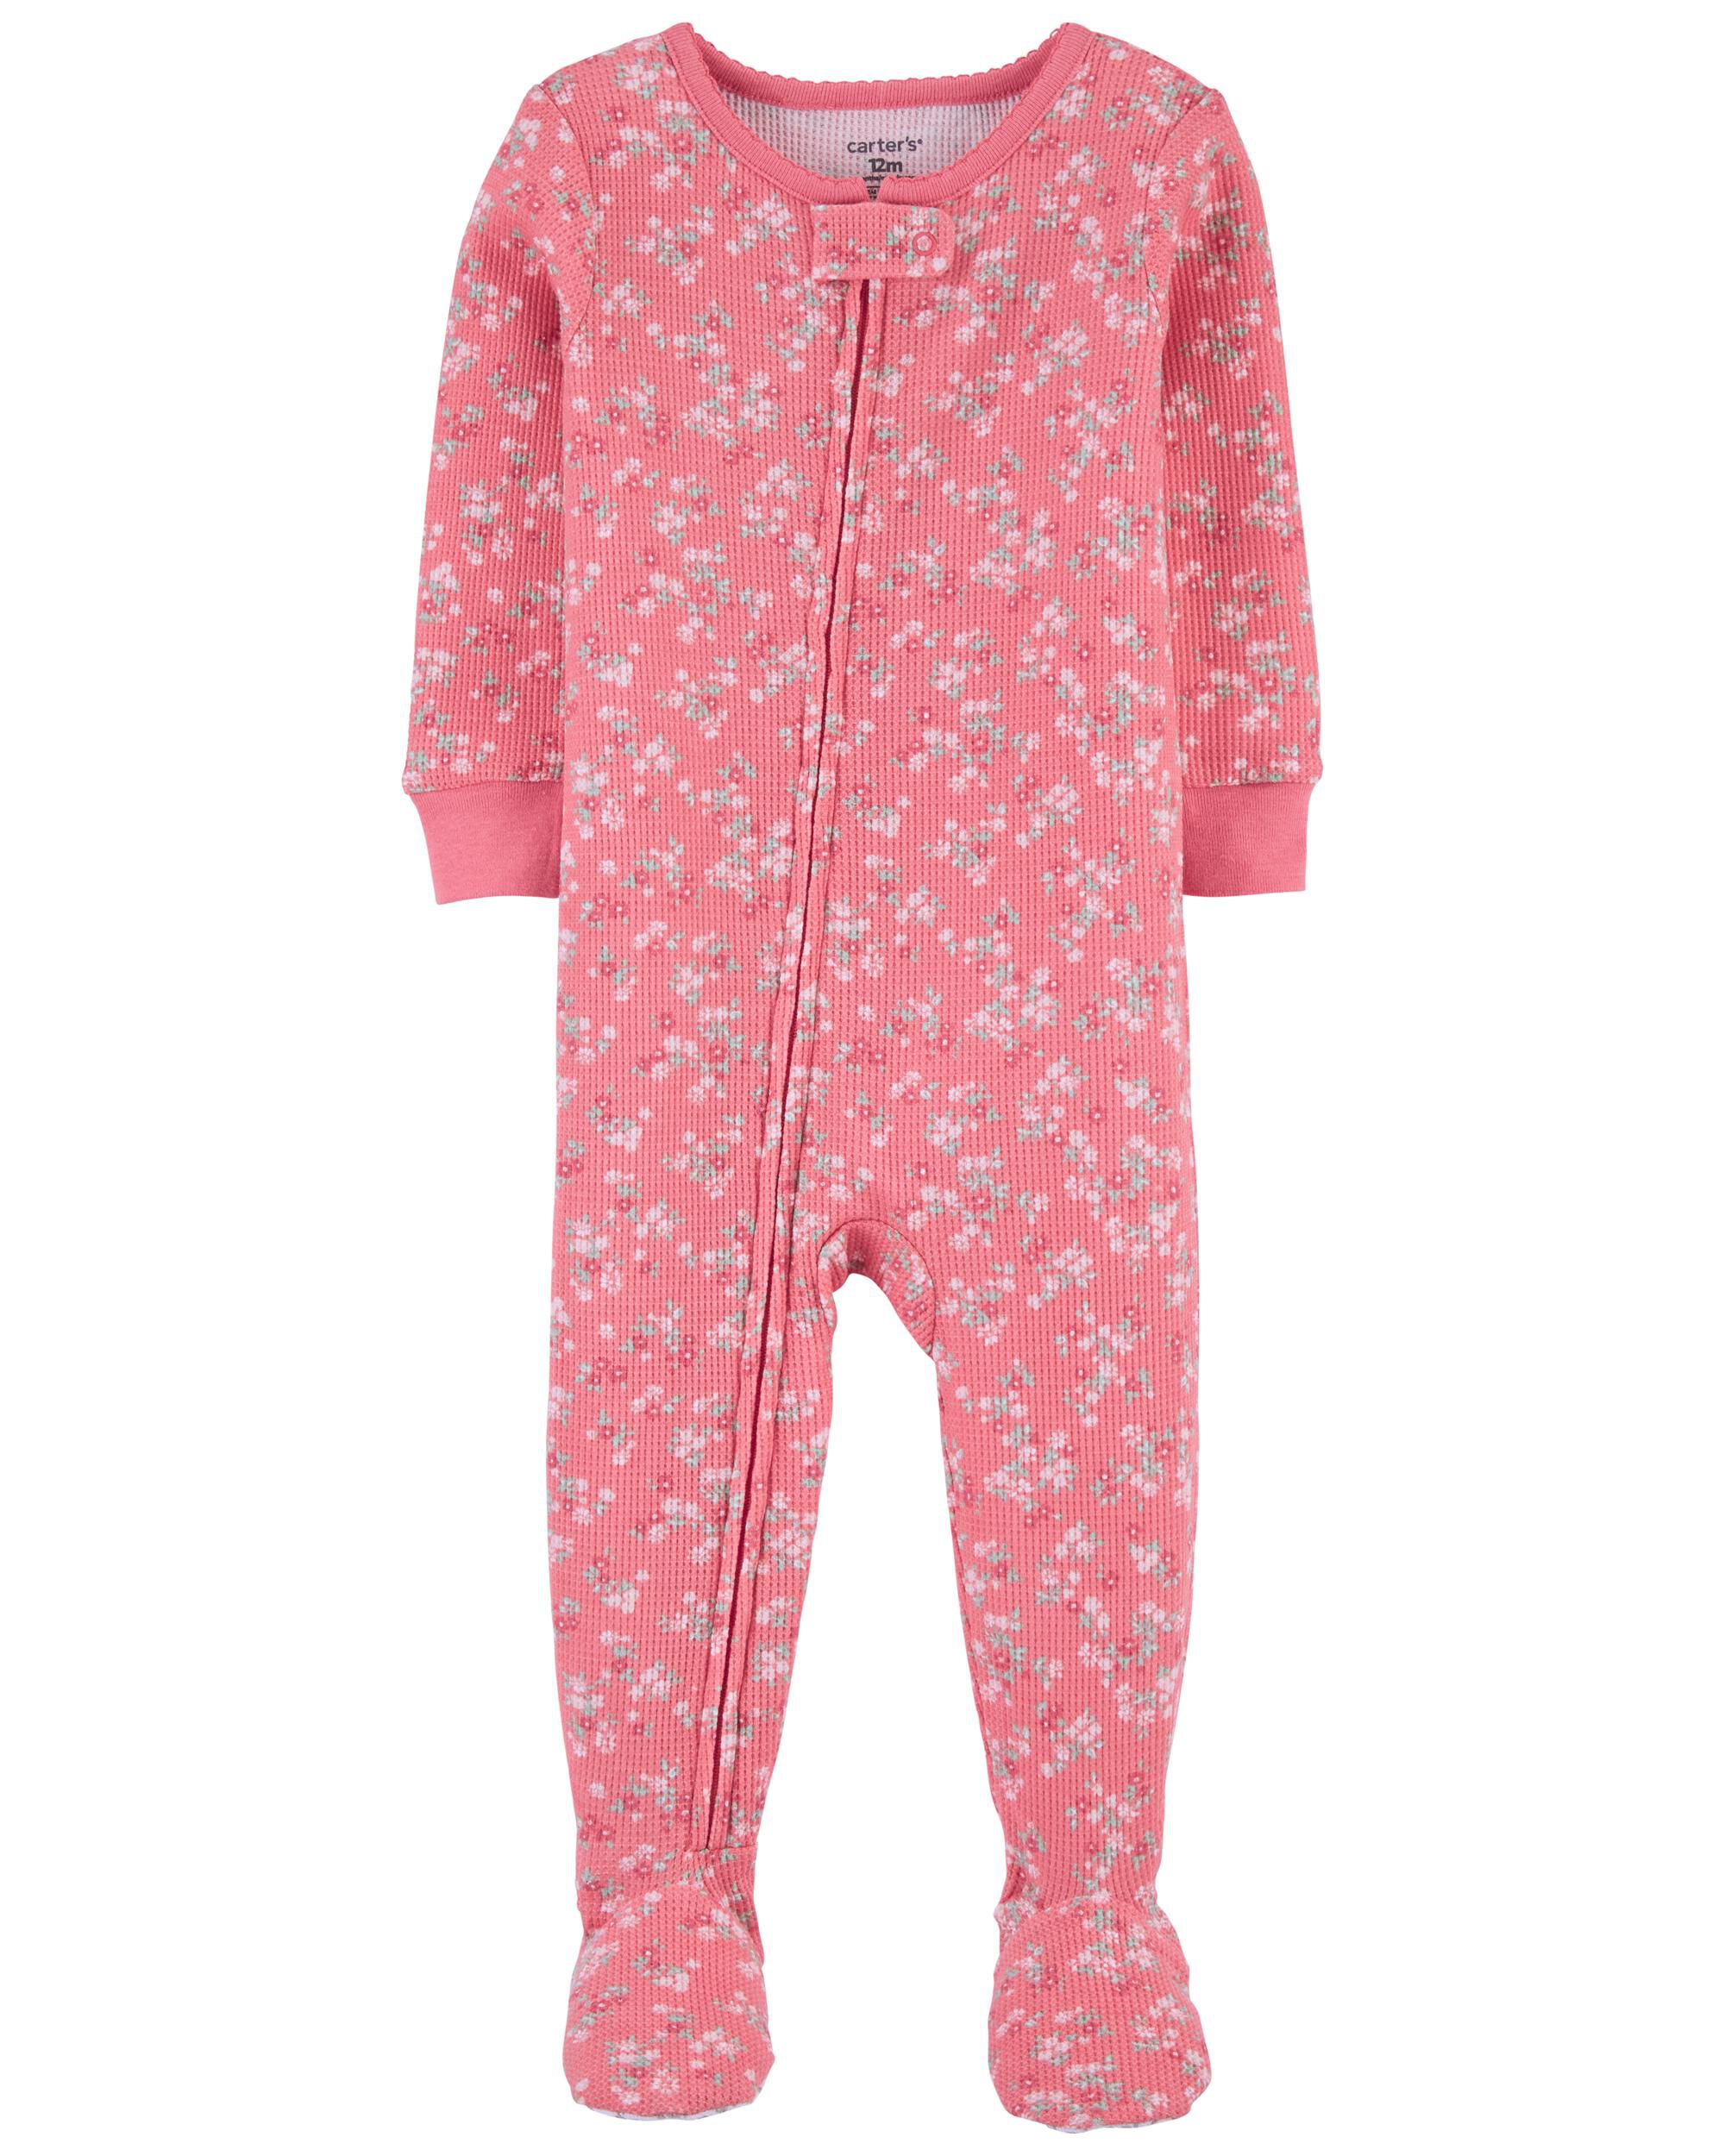 Carters Fleece Footed Pajama Blanket Sleeper Size 14  Pink Baby Blue Hearts 